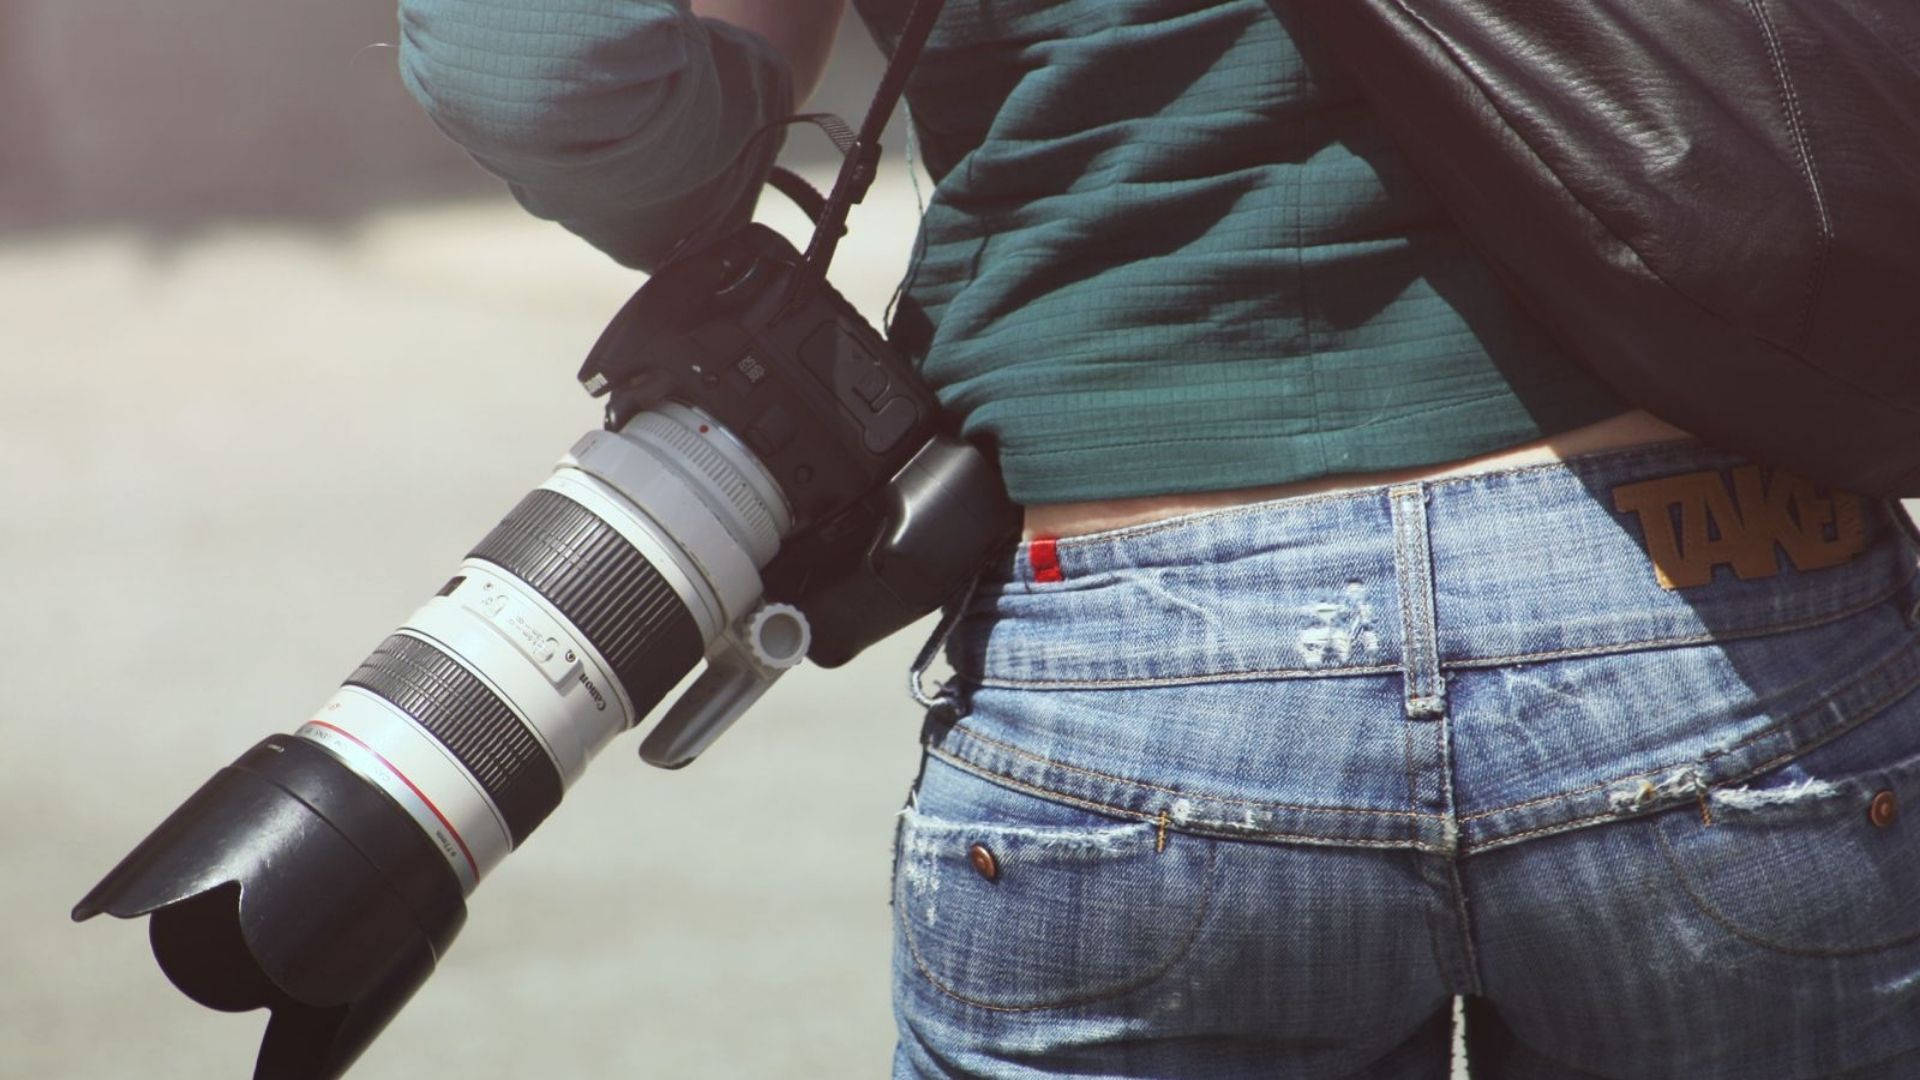 Photographer Carrying A Camera